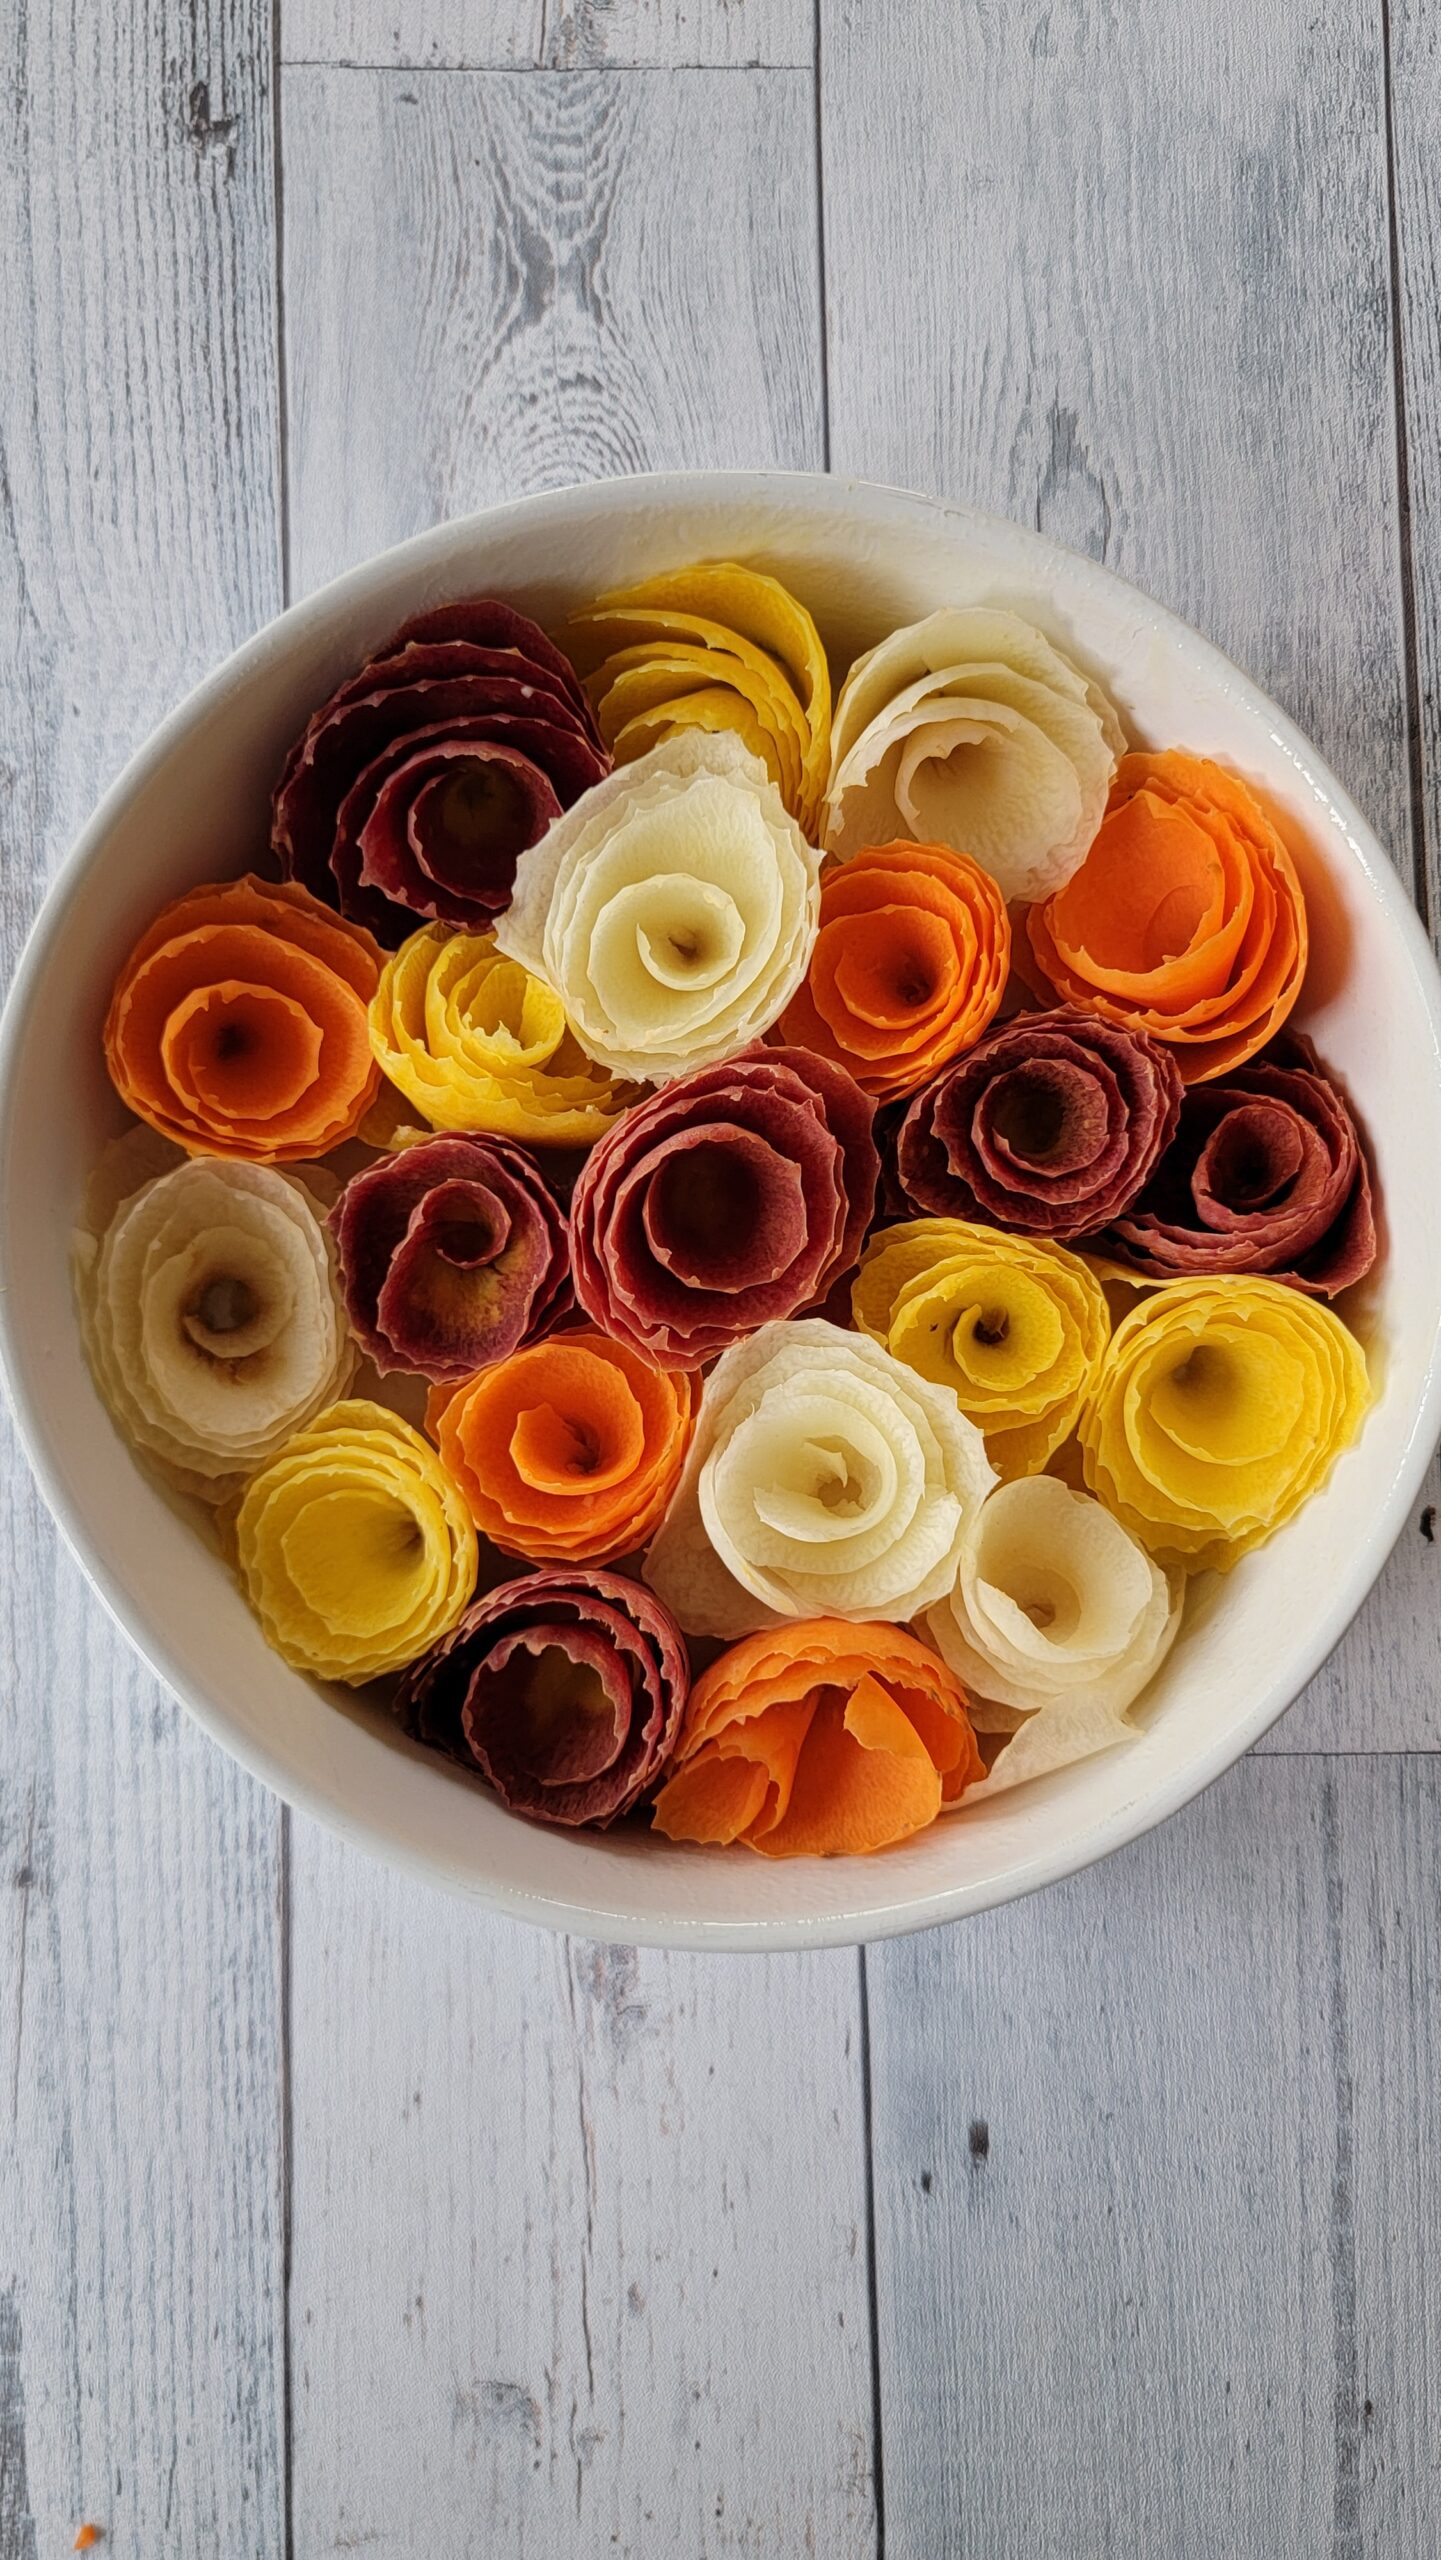 Rainbow Carrot Roses before Baking